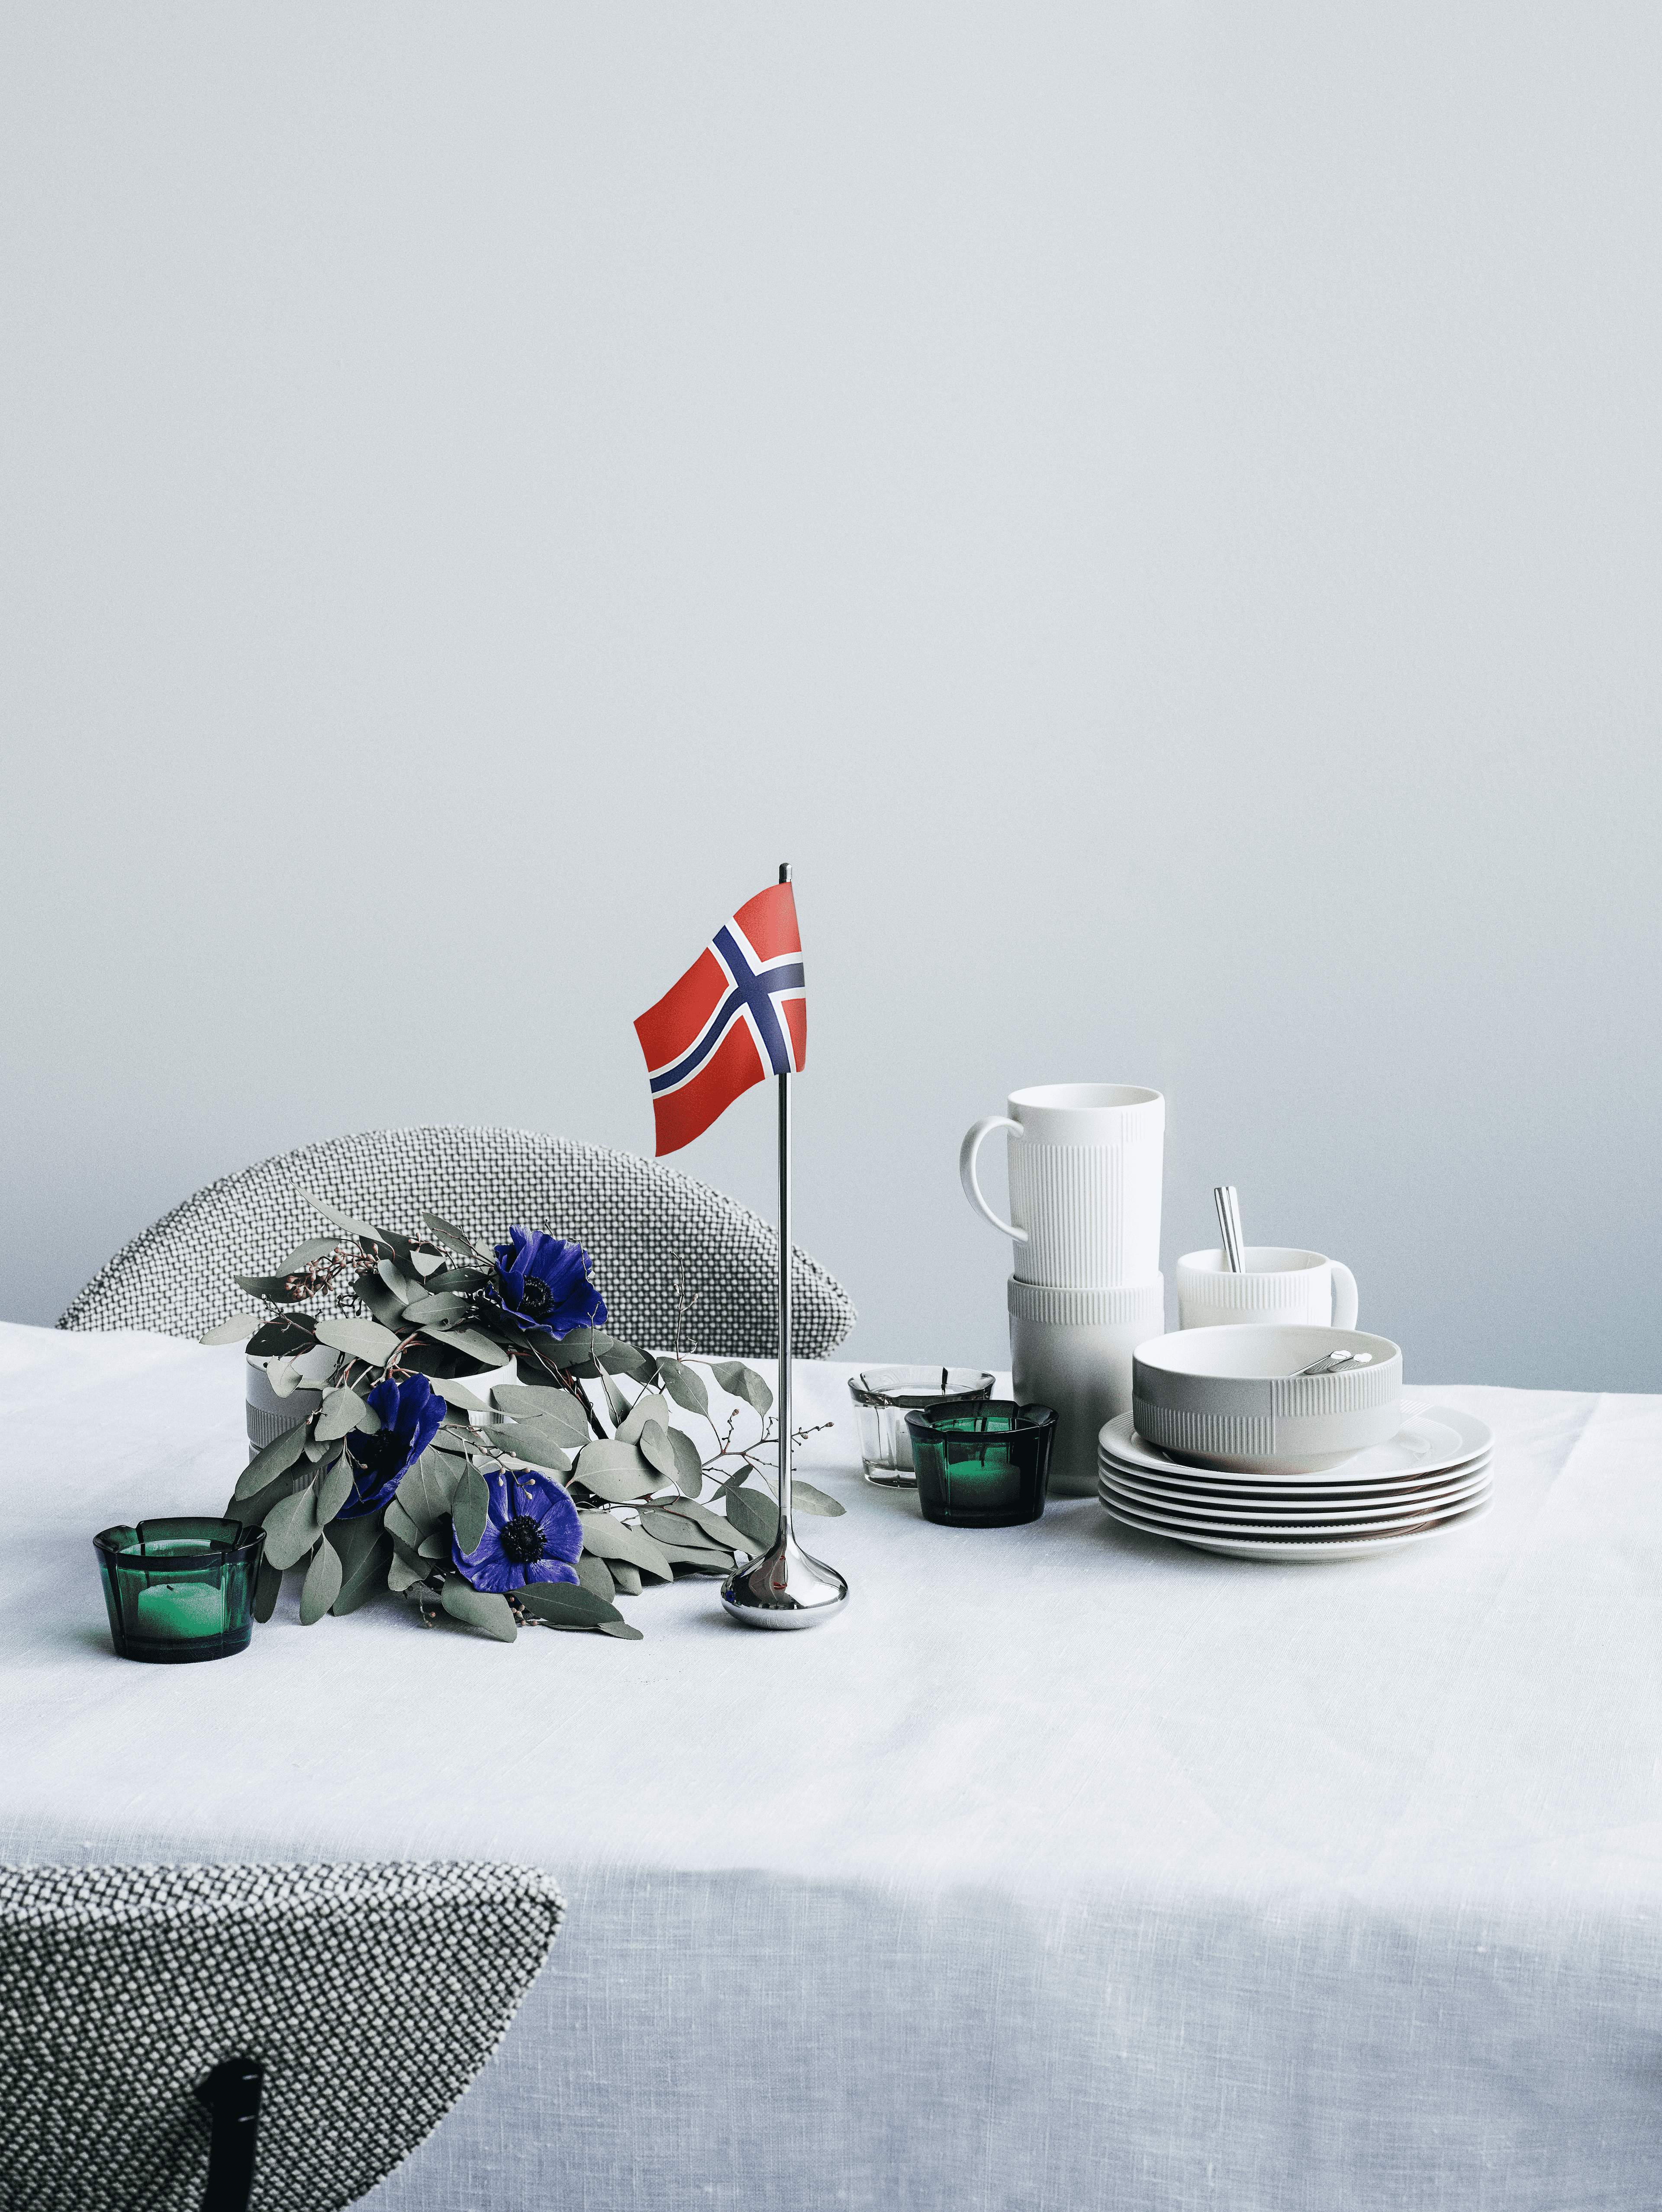 Bordflagg norsk H35